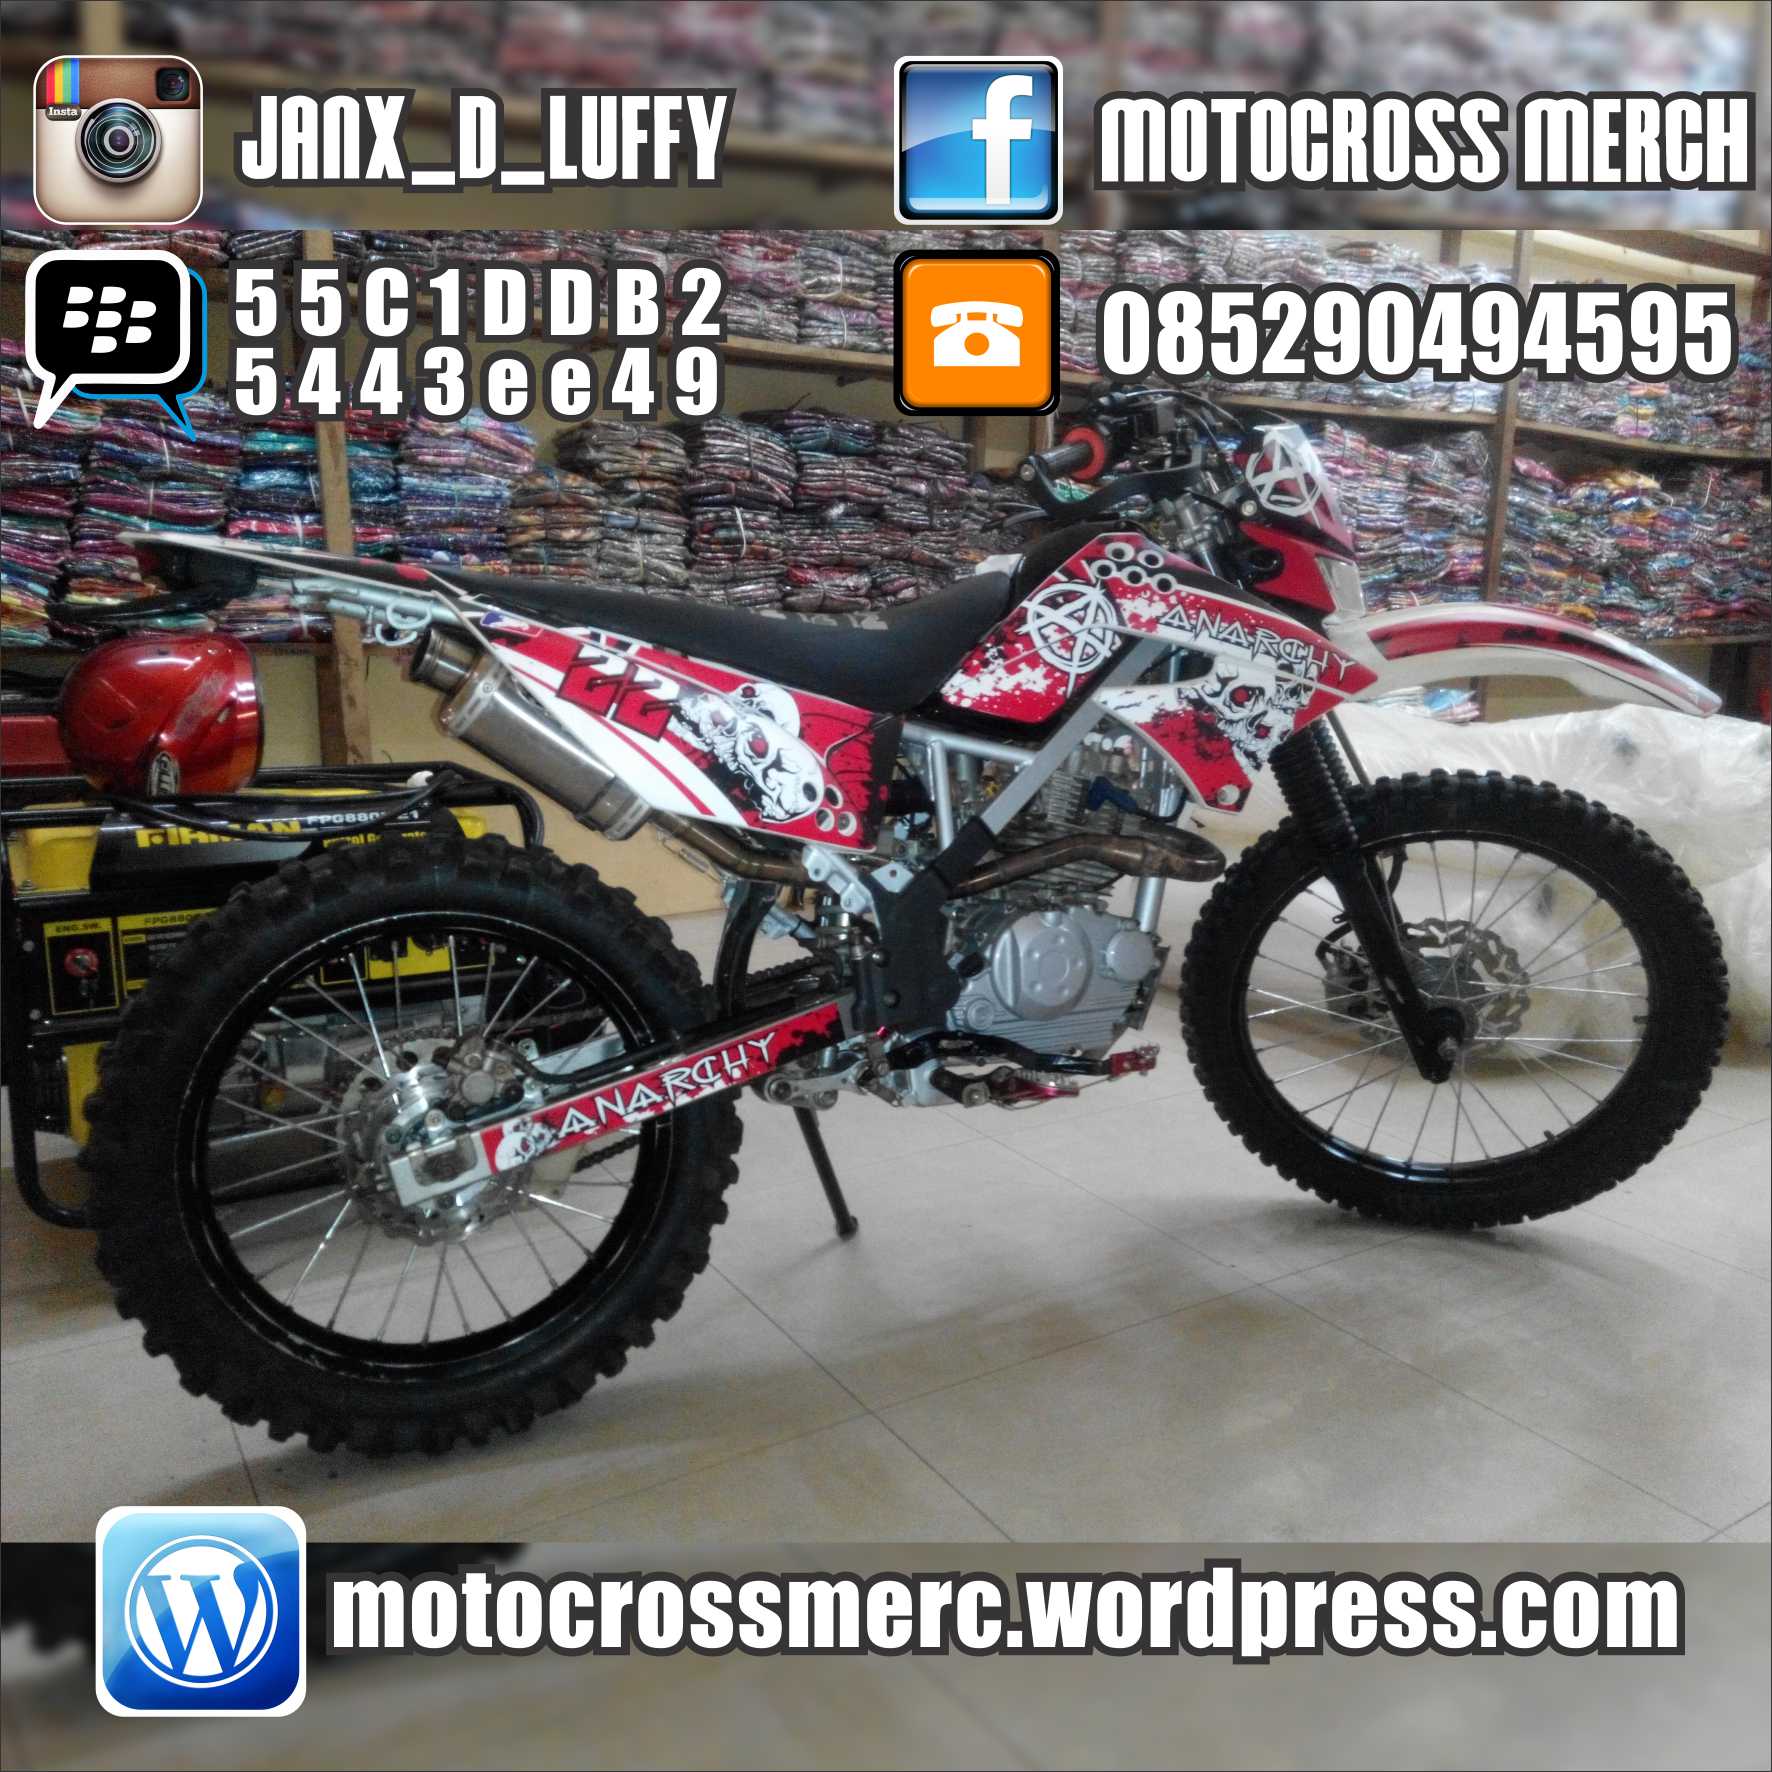 MODIFIKASI MOTOR Motocross Merch